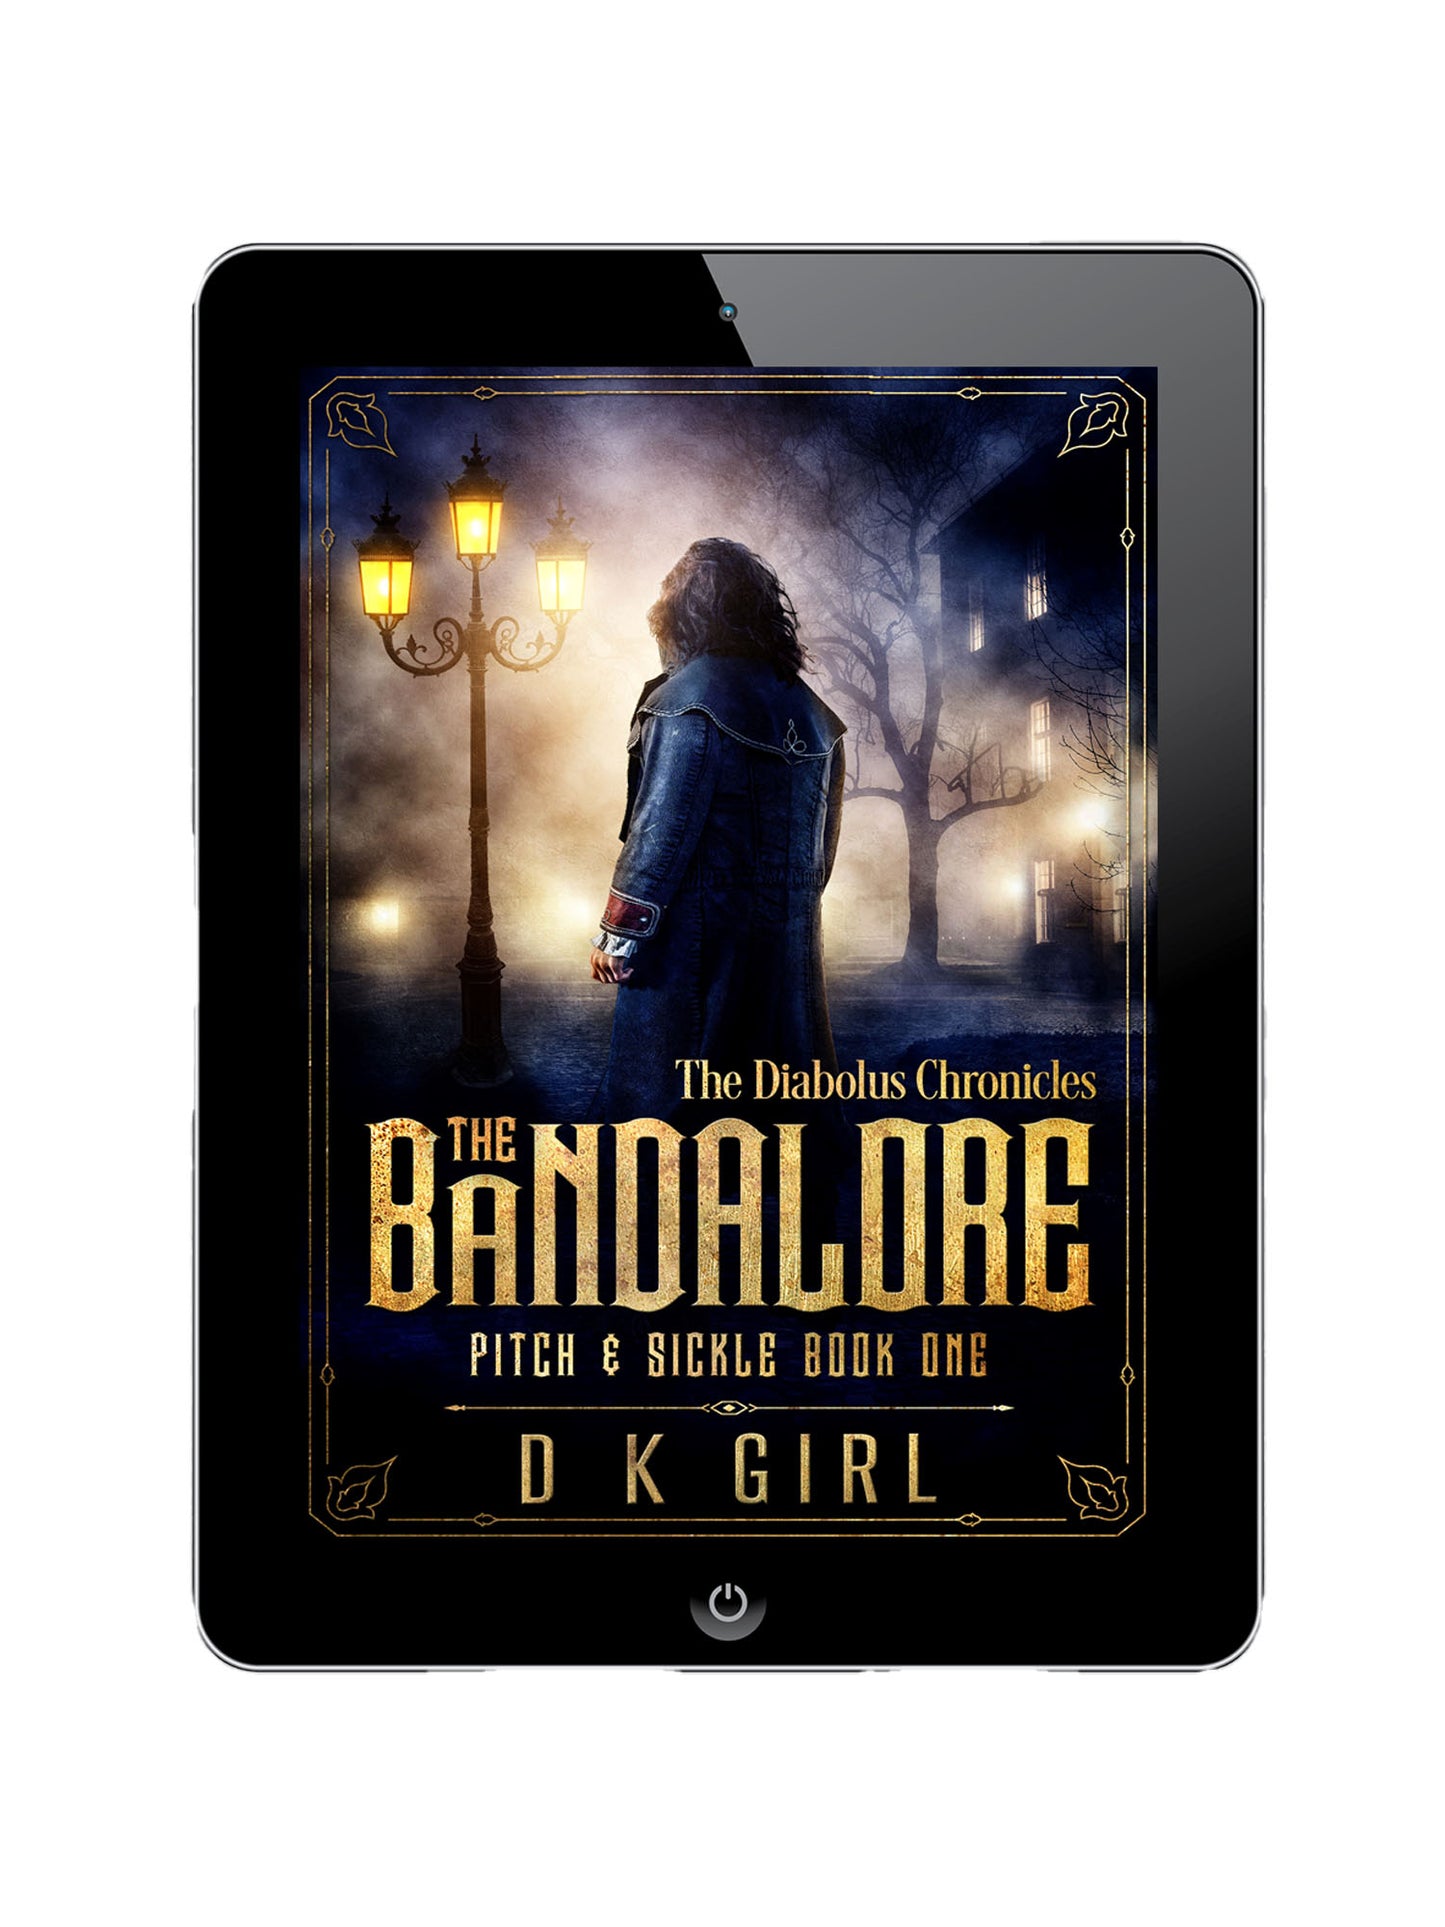 The Bandalore - Pitch & Sickle Book One (Ebook)